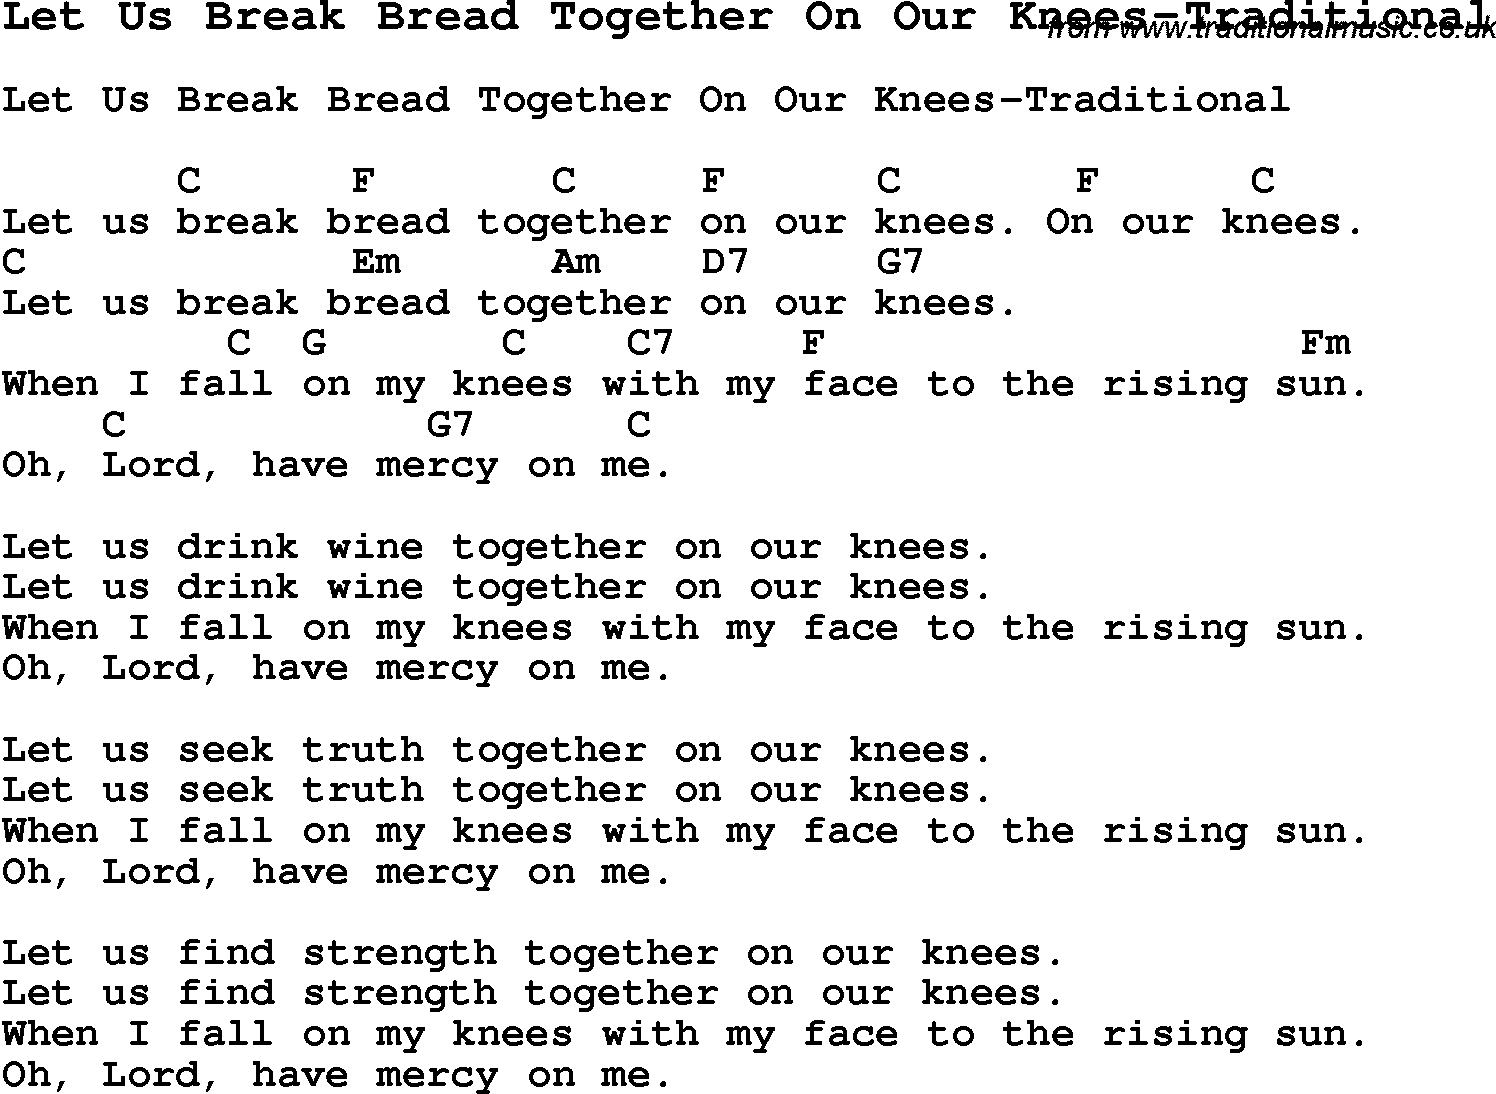 Summer-Camp Song, Let Us Break Bread Together On Our Knees-Traditional, with lyrics and chords for Ukulele, Guitar Banjo etc.